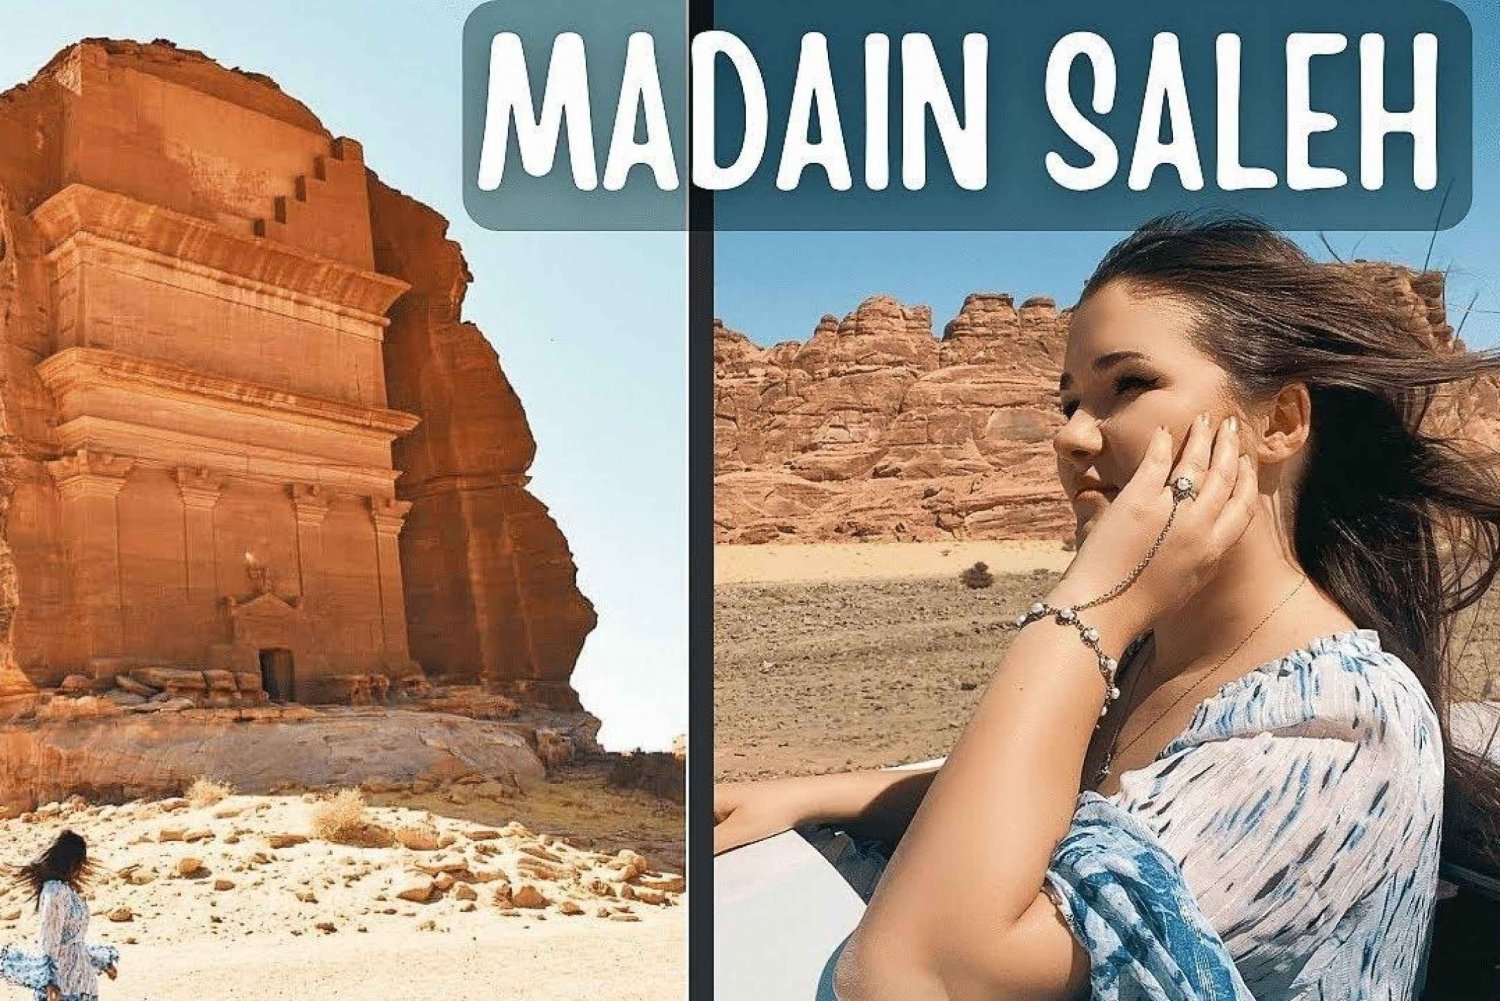 Saudi-Arabien: Madain Saleh-tur